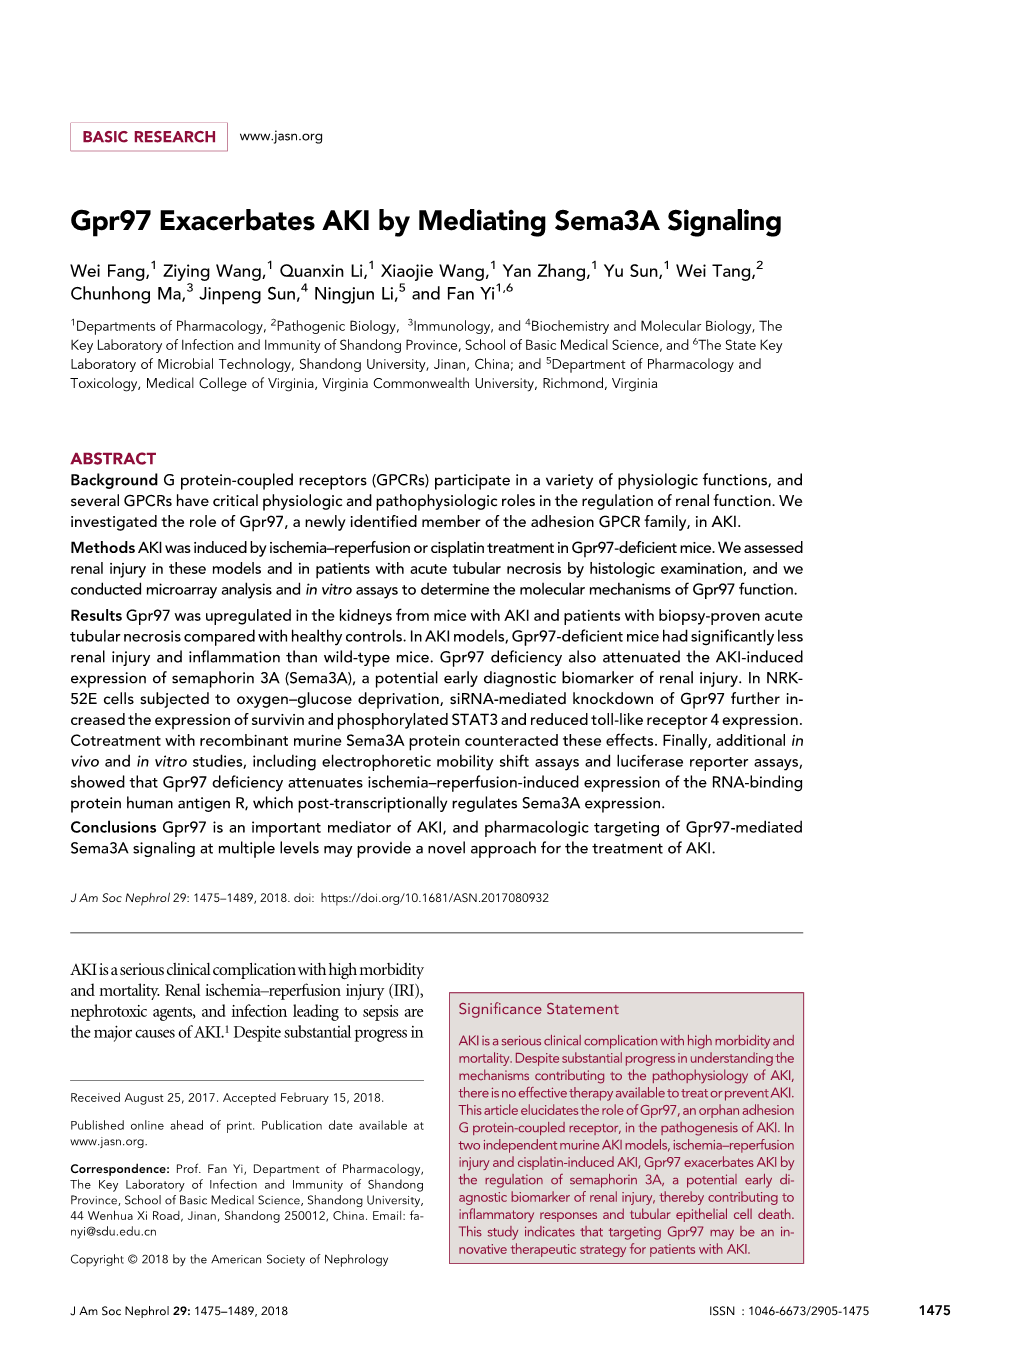 Gpr97 Exacerbates AKI by Mediating Sema3a Signaling